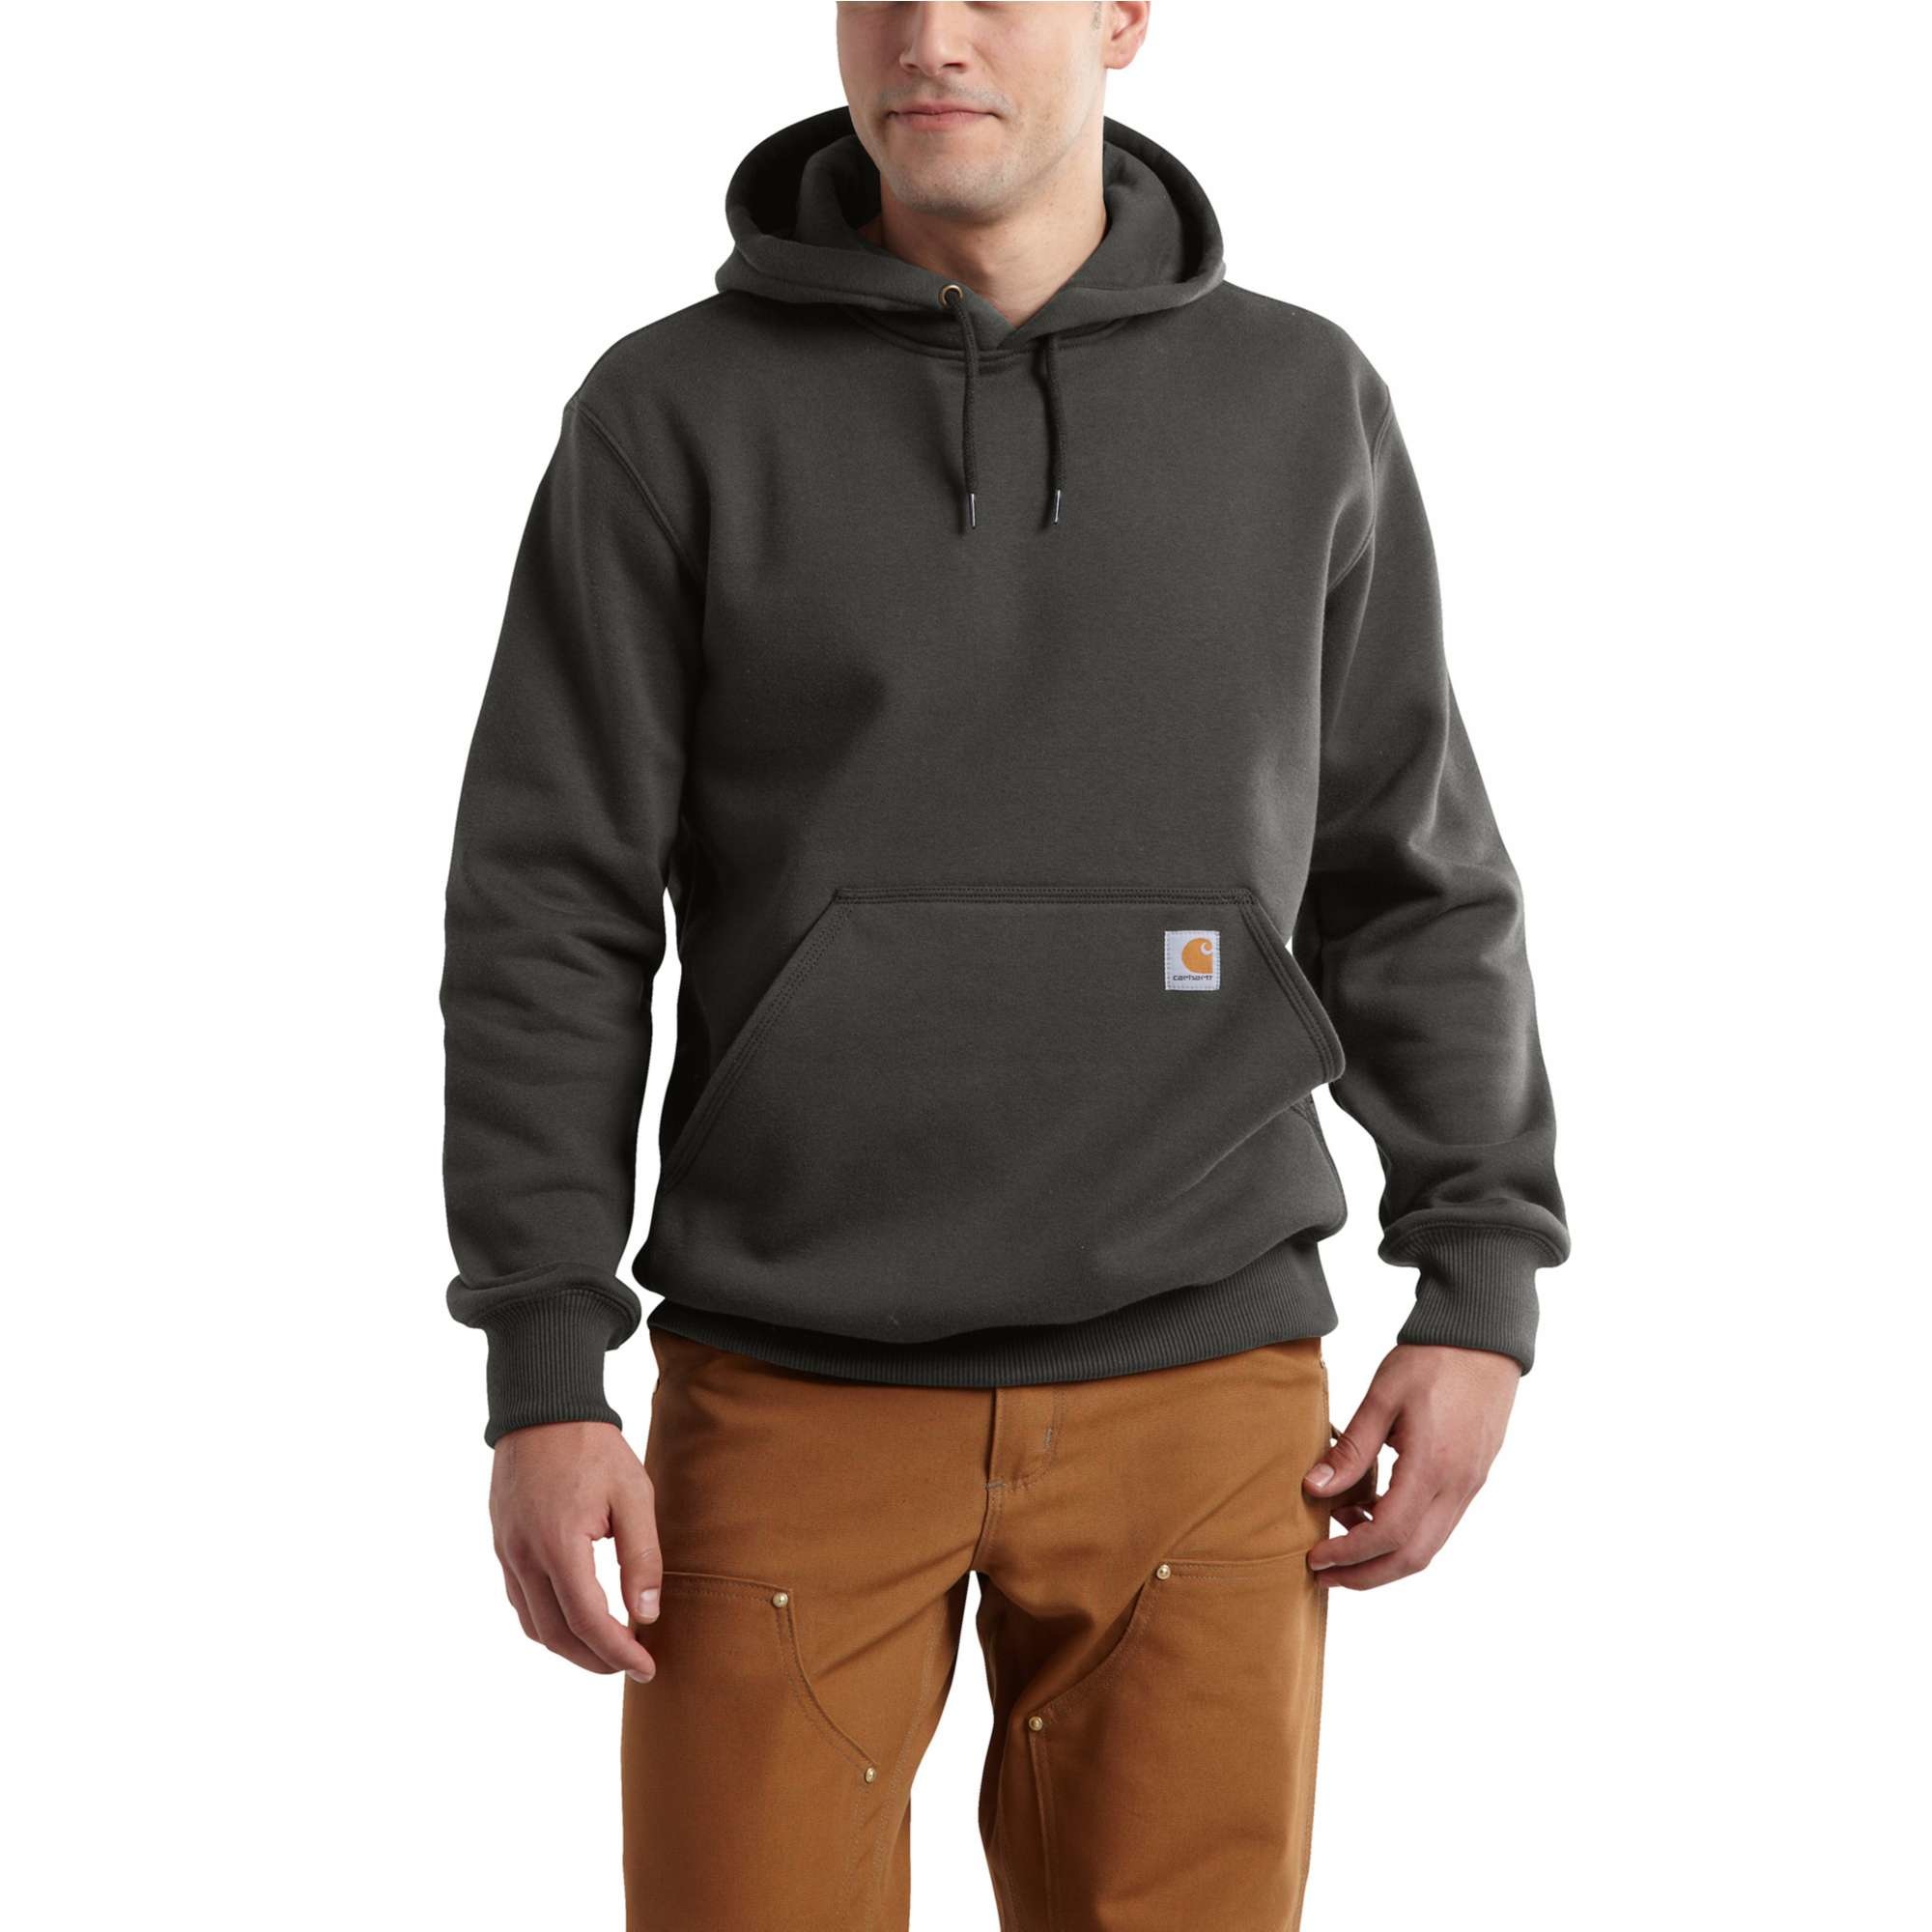 Carhartt Hooded Sweatshirts On Sale Good Quality